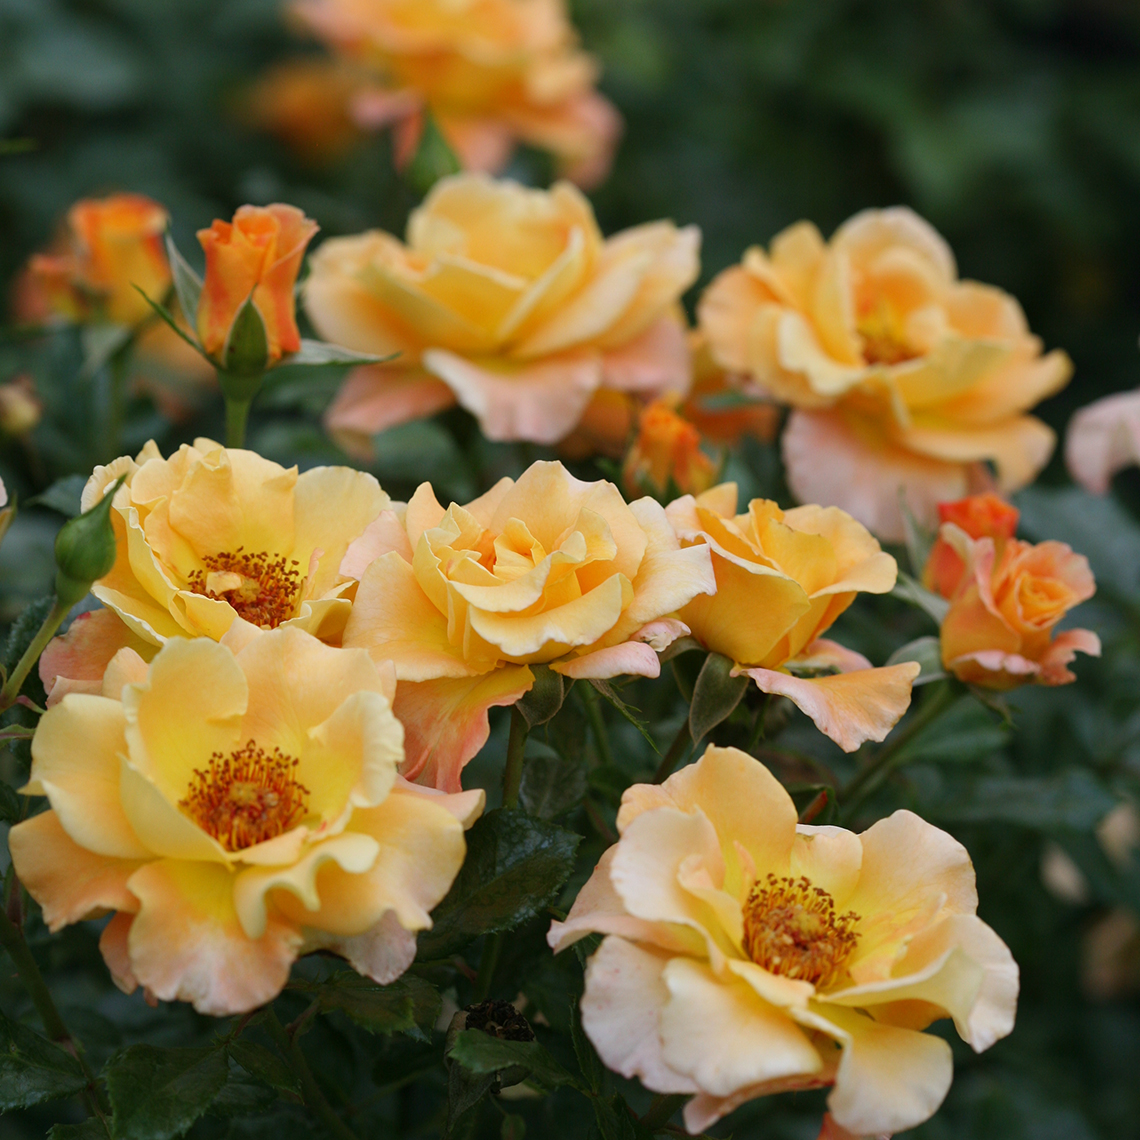 Sunorita Rosa blooming in hues of orange gold and yellow